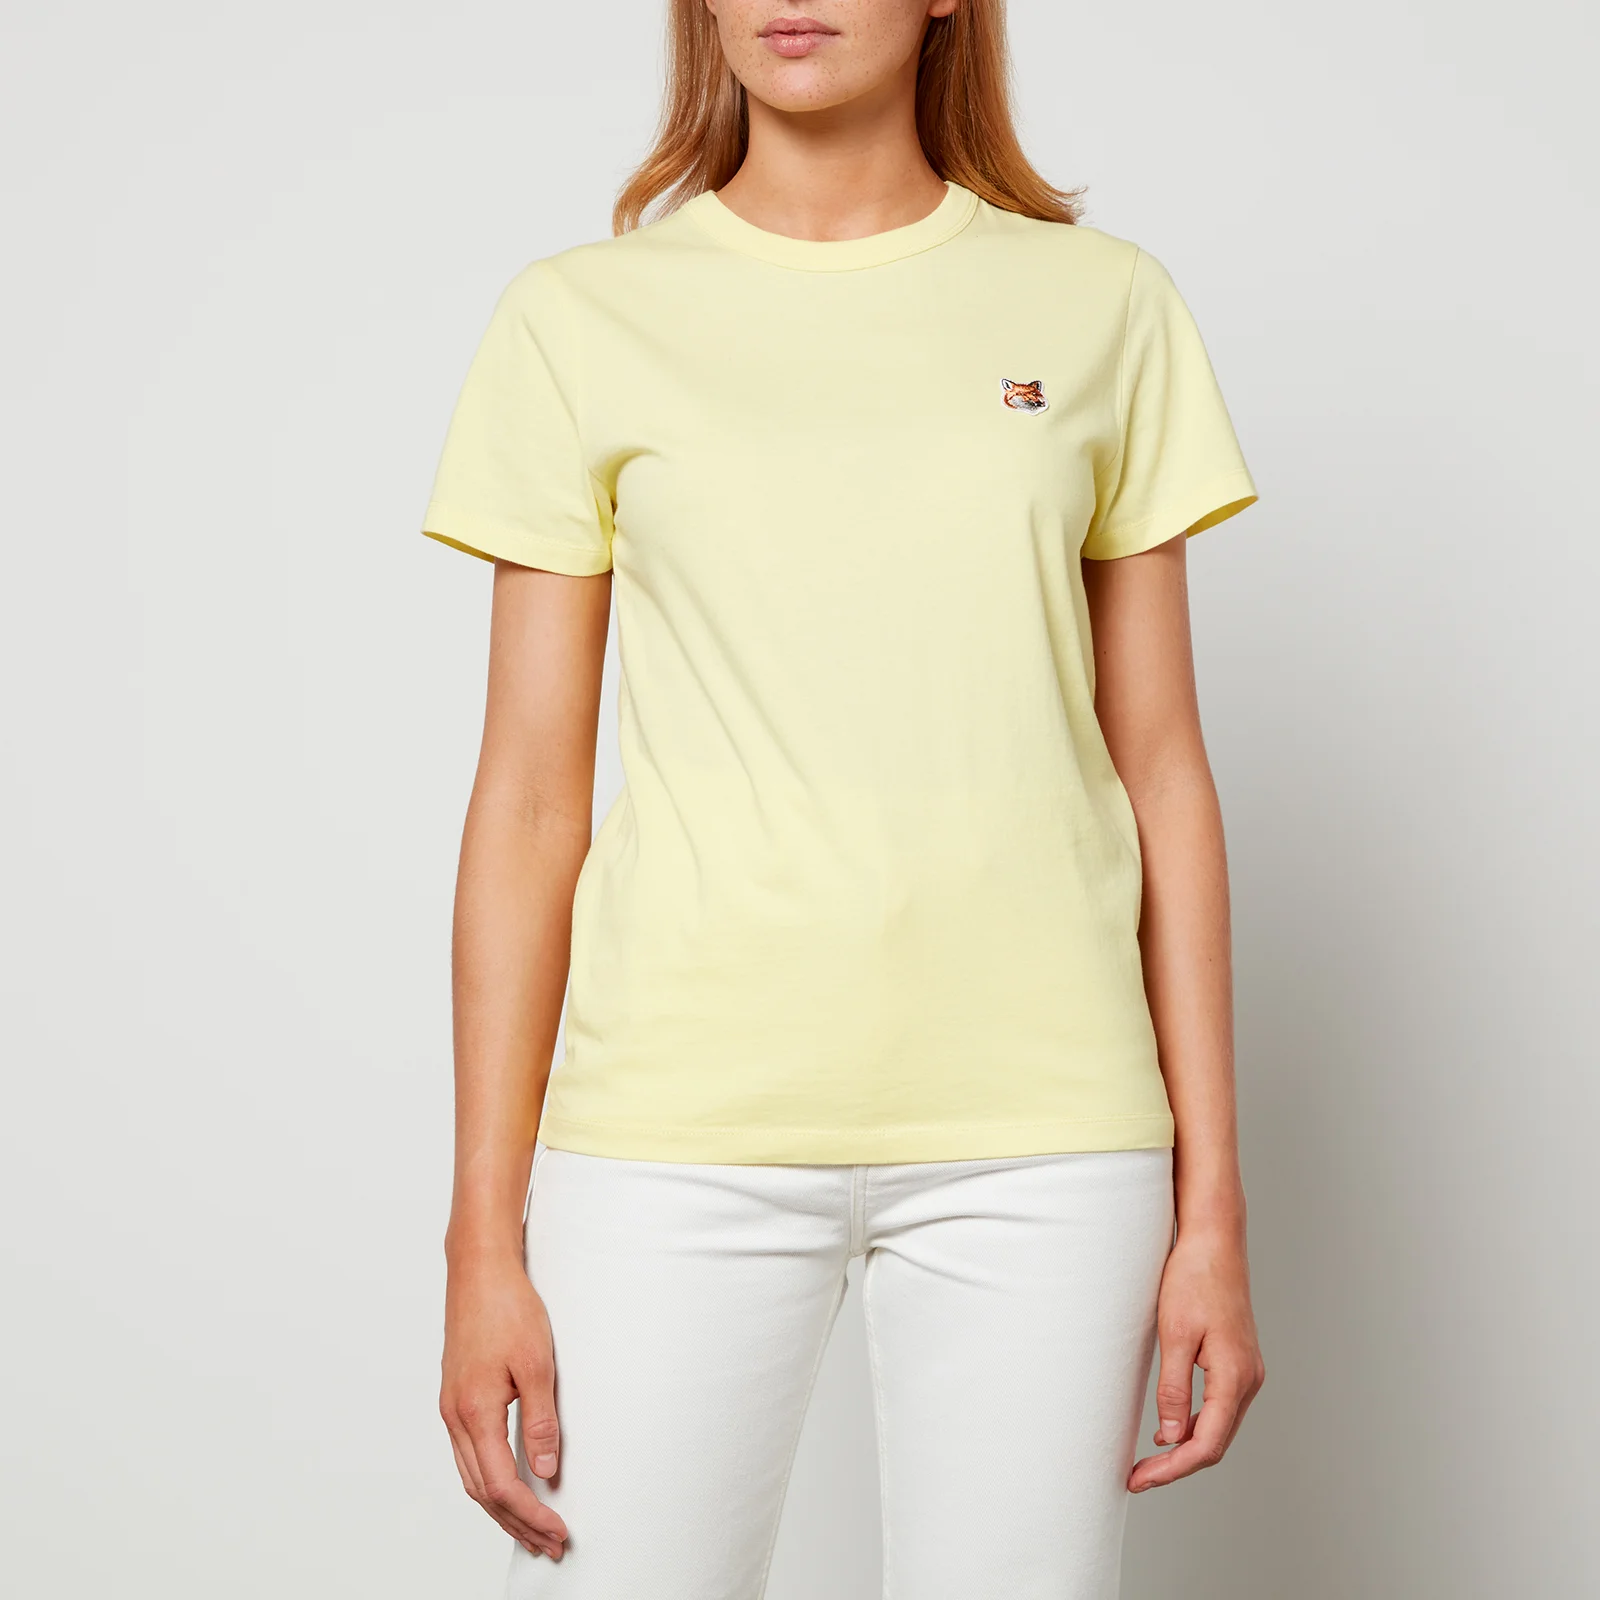 Maison Kitsuné Women's Fox Head Patch Classic T-Shirt - Light Yellow Image 1